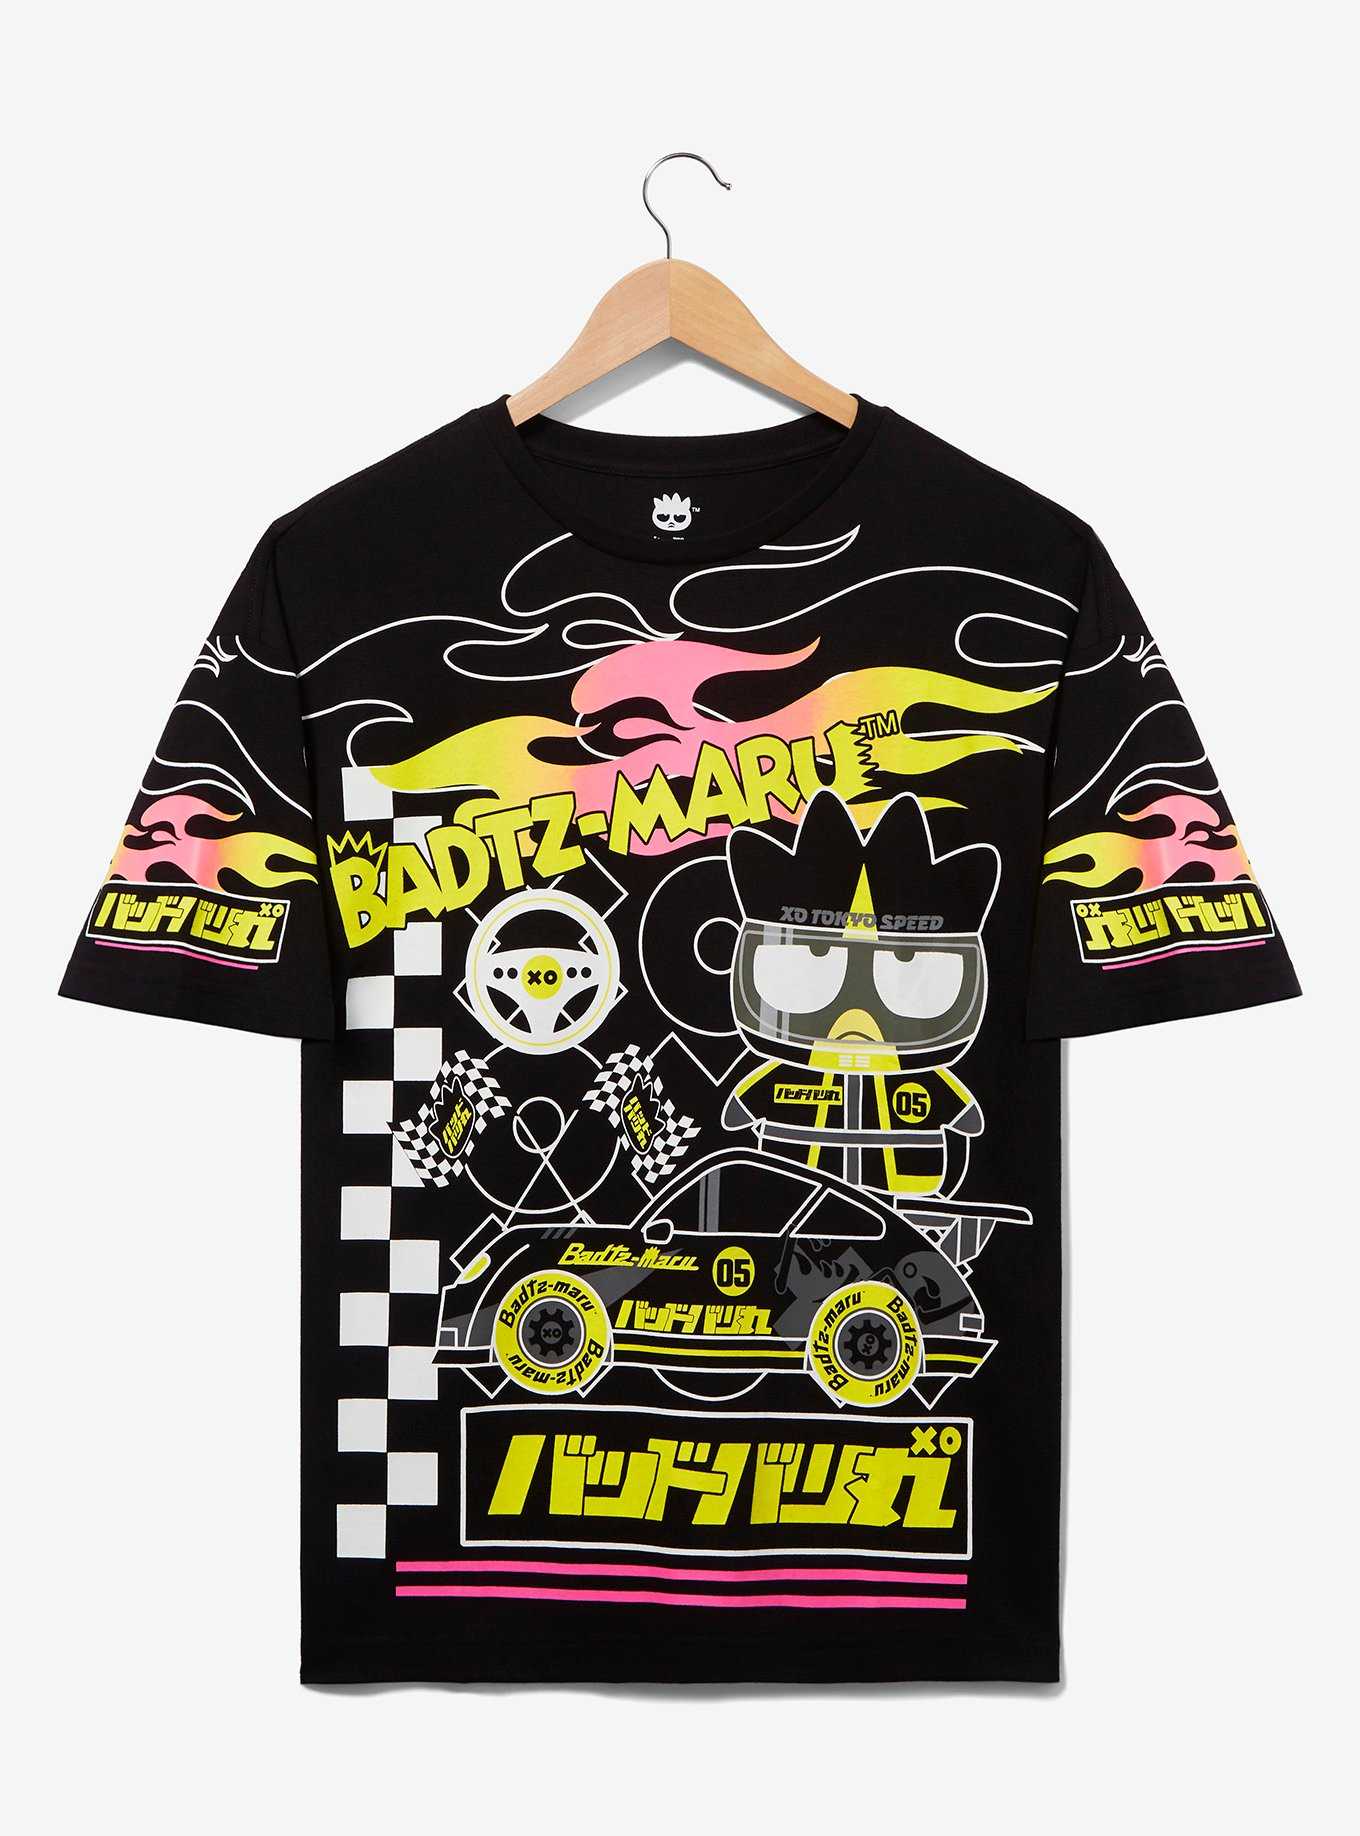 Sanrio Badtz-Maru Racecar T-Shirt - BoxLunch Exclusive, , hi-res